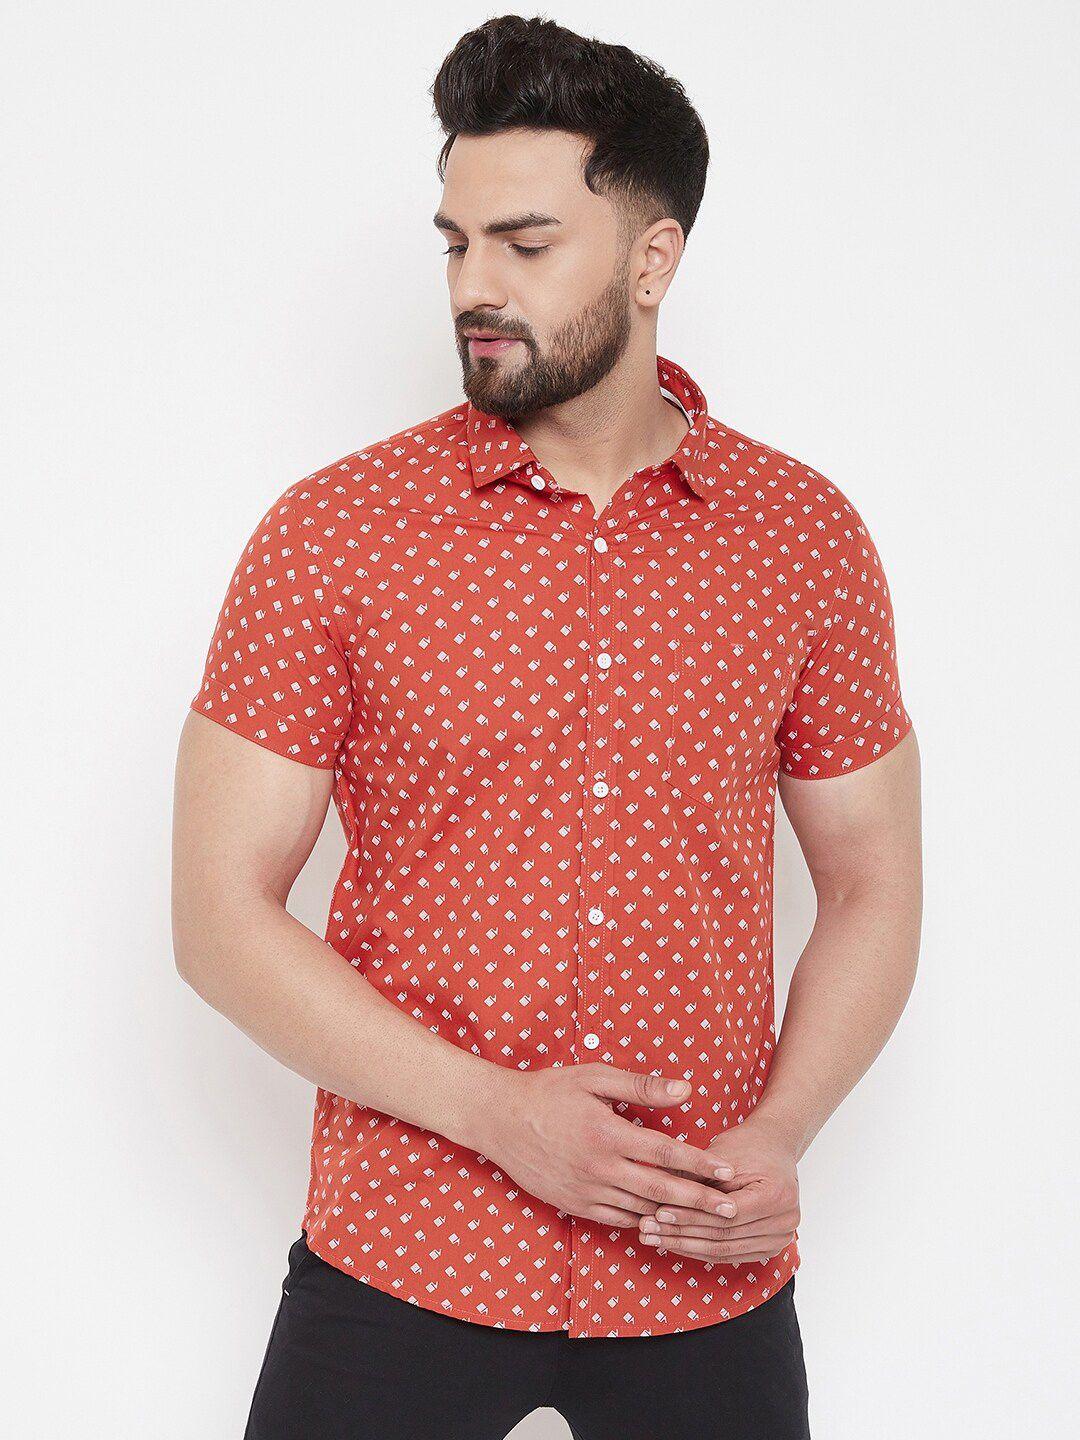 canary london smart slim fit geometric printed casual cotton shirt